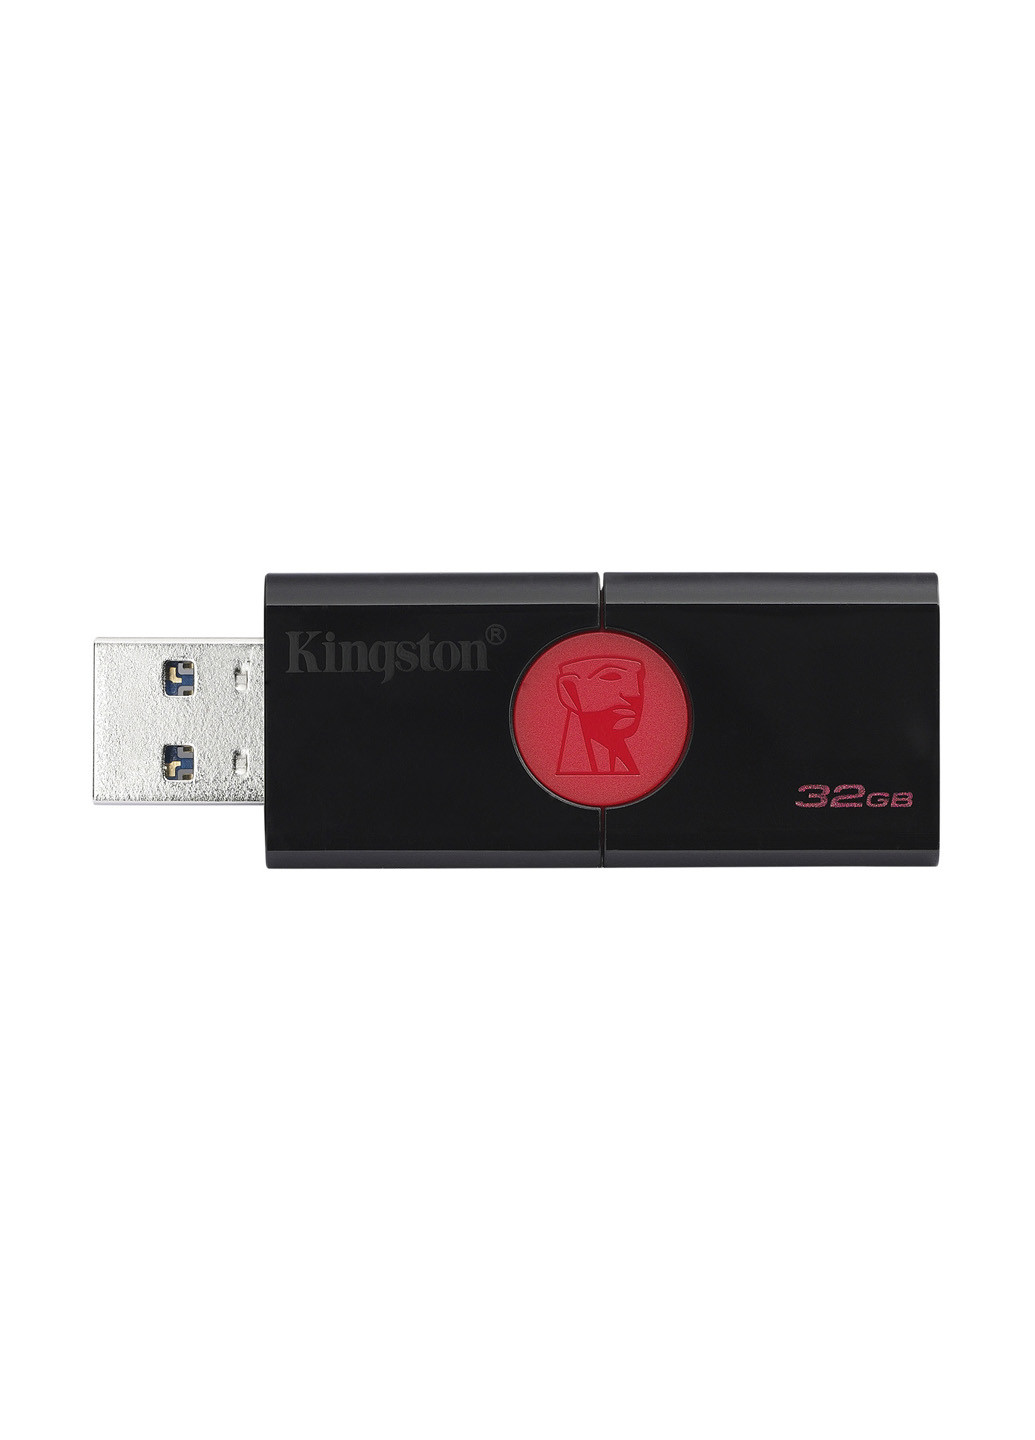 Флеш пам'ять USB DataTraveler 106 32GB USB 3.1 (DT106 / 32GB) Kingston флеш память usb kingston datatraveler 106 32gb usb 3.1 (dt106/32gb) (134201748)